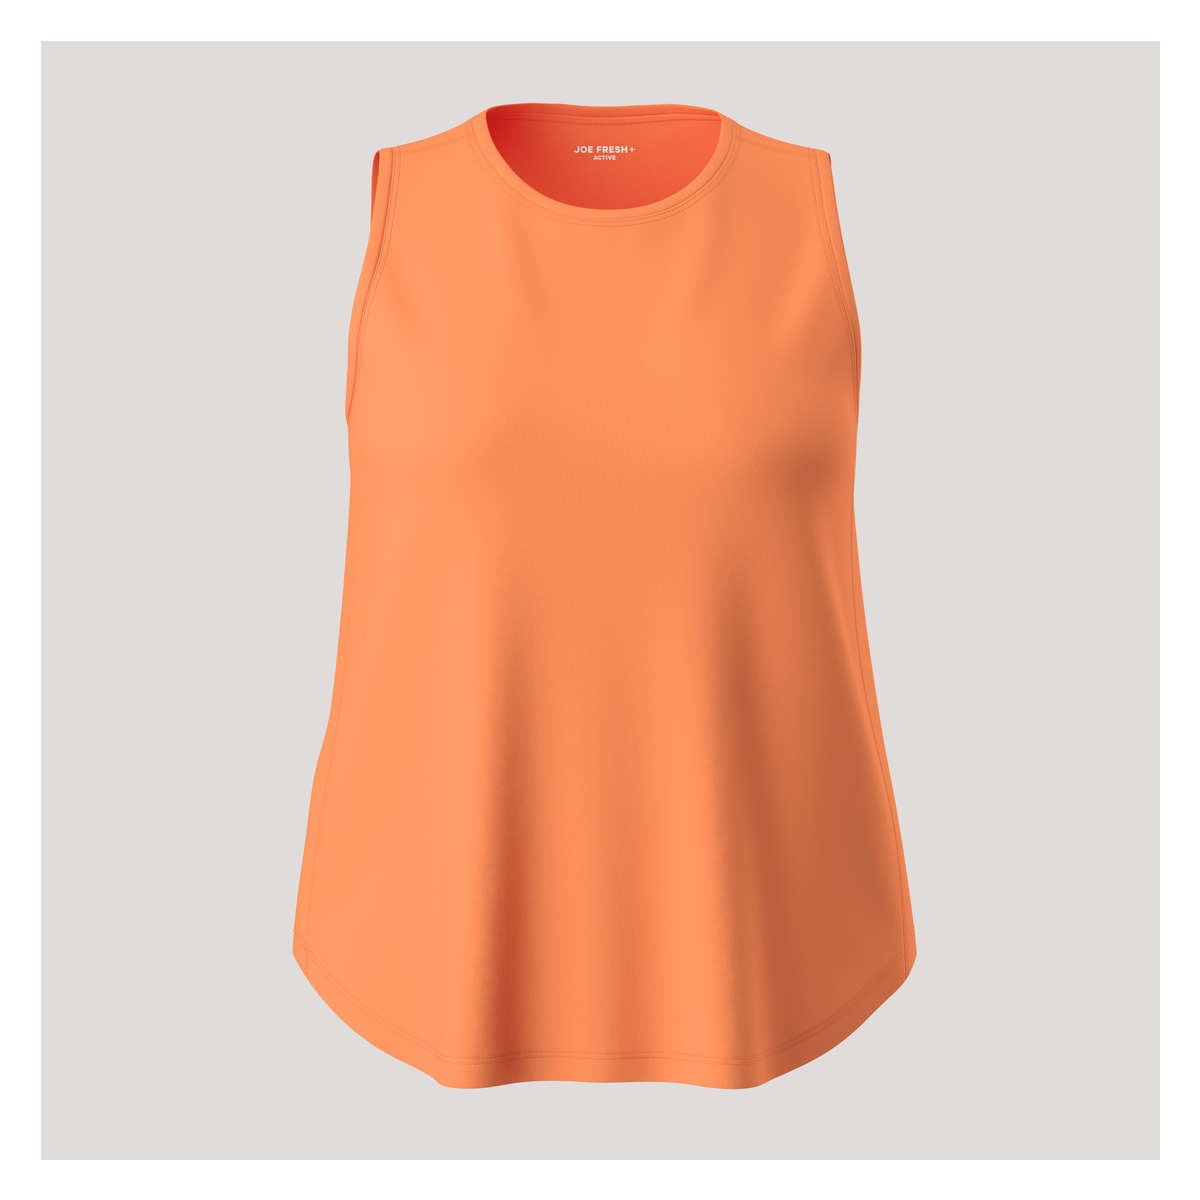 Wishful Park Womens Tank Top Orange Size Large Cross Back Top Summer Shirt  